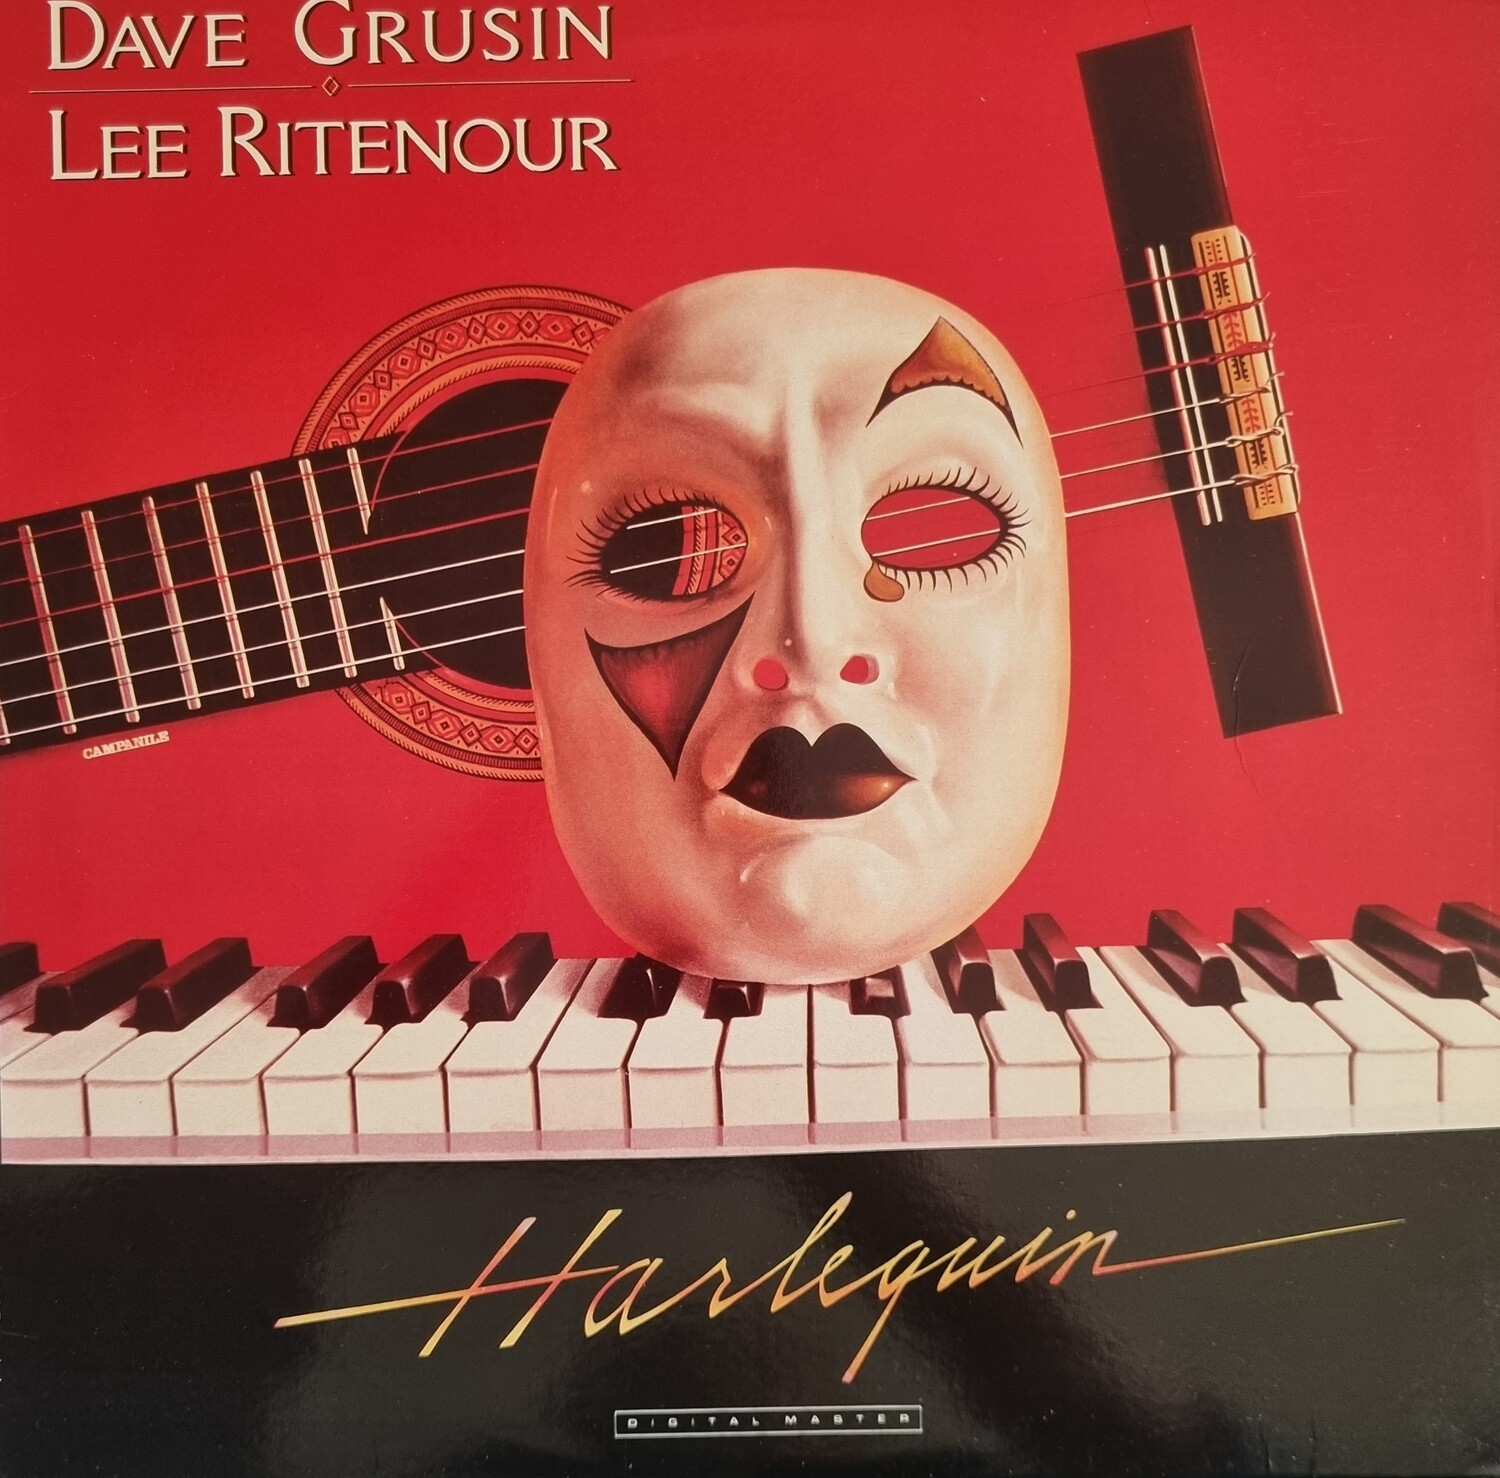 Dave Grusin, Lee Ritenour – Harlequin (1985)